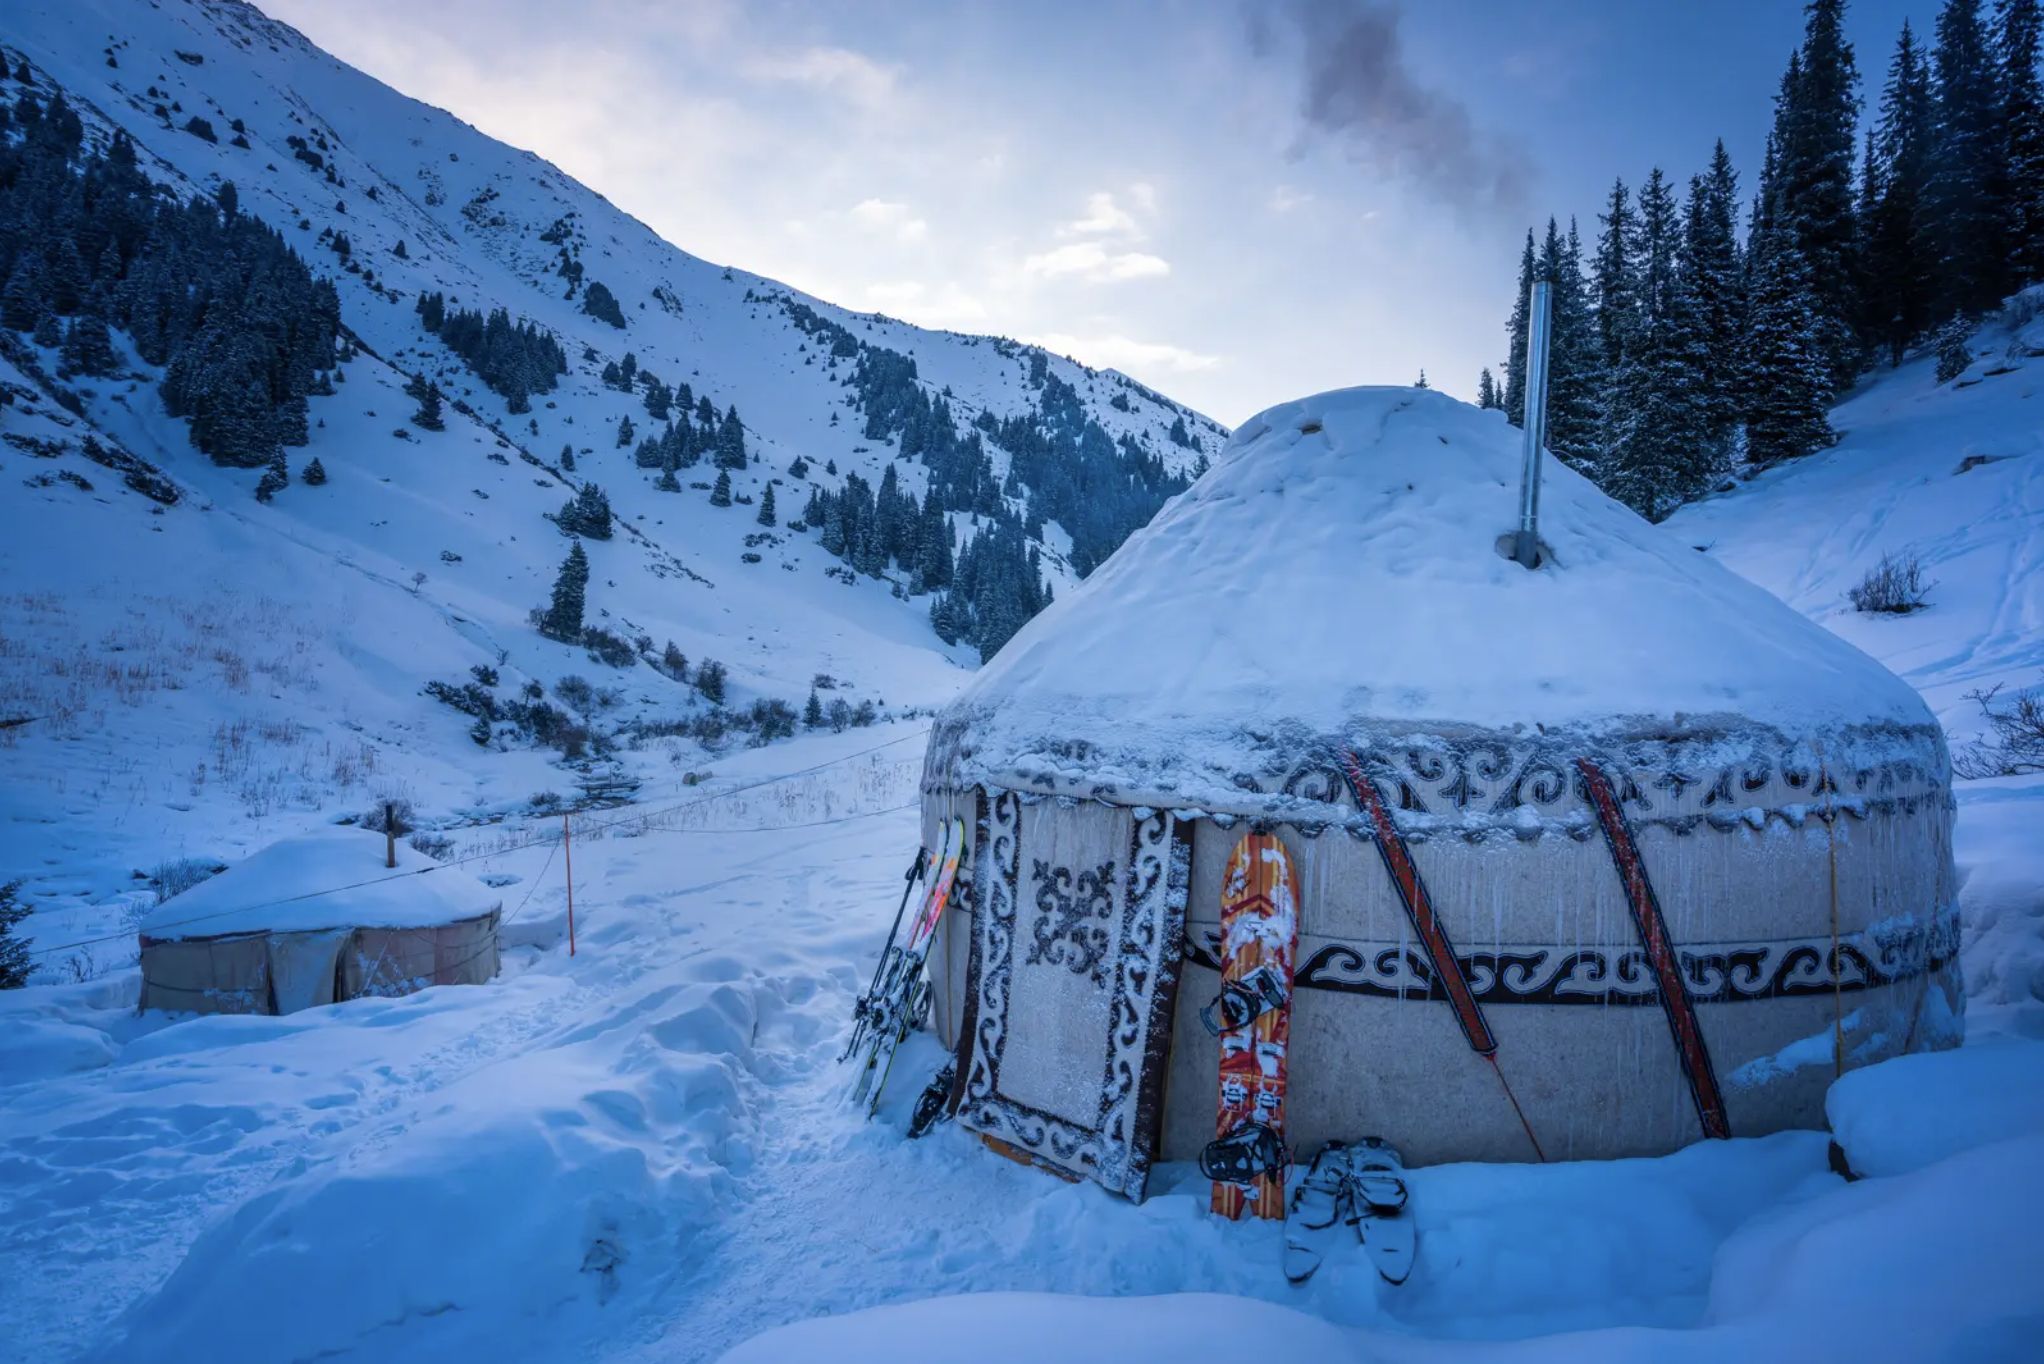 Yurt in the snow